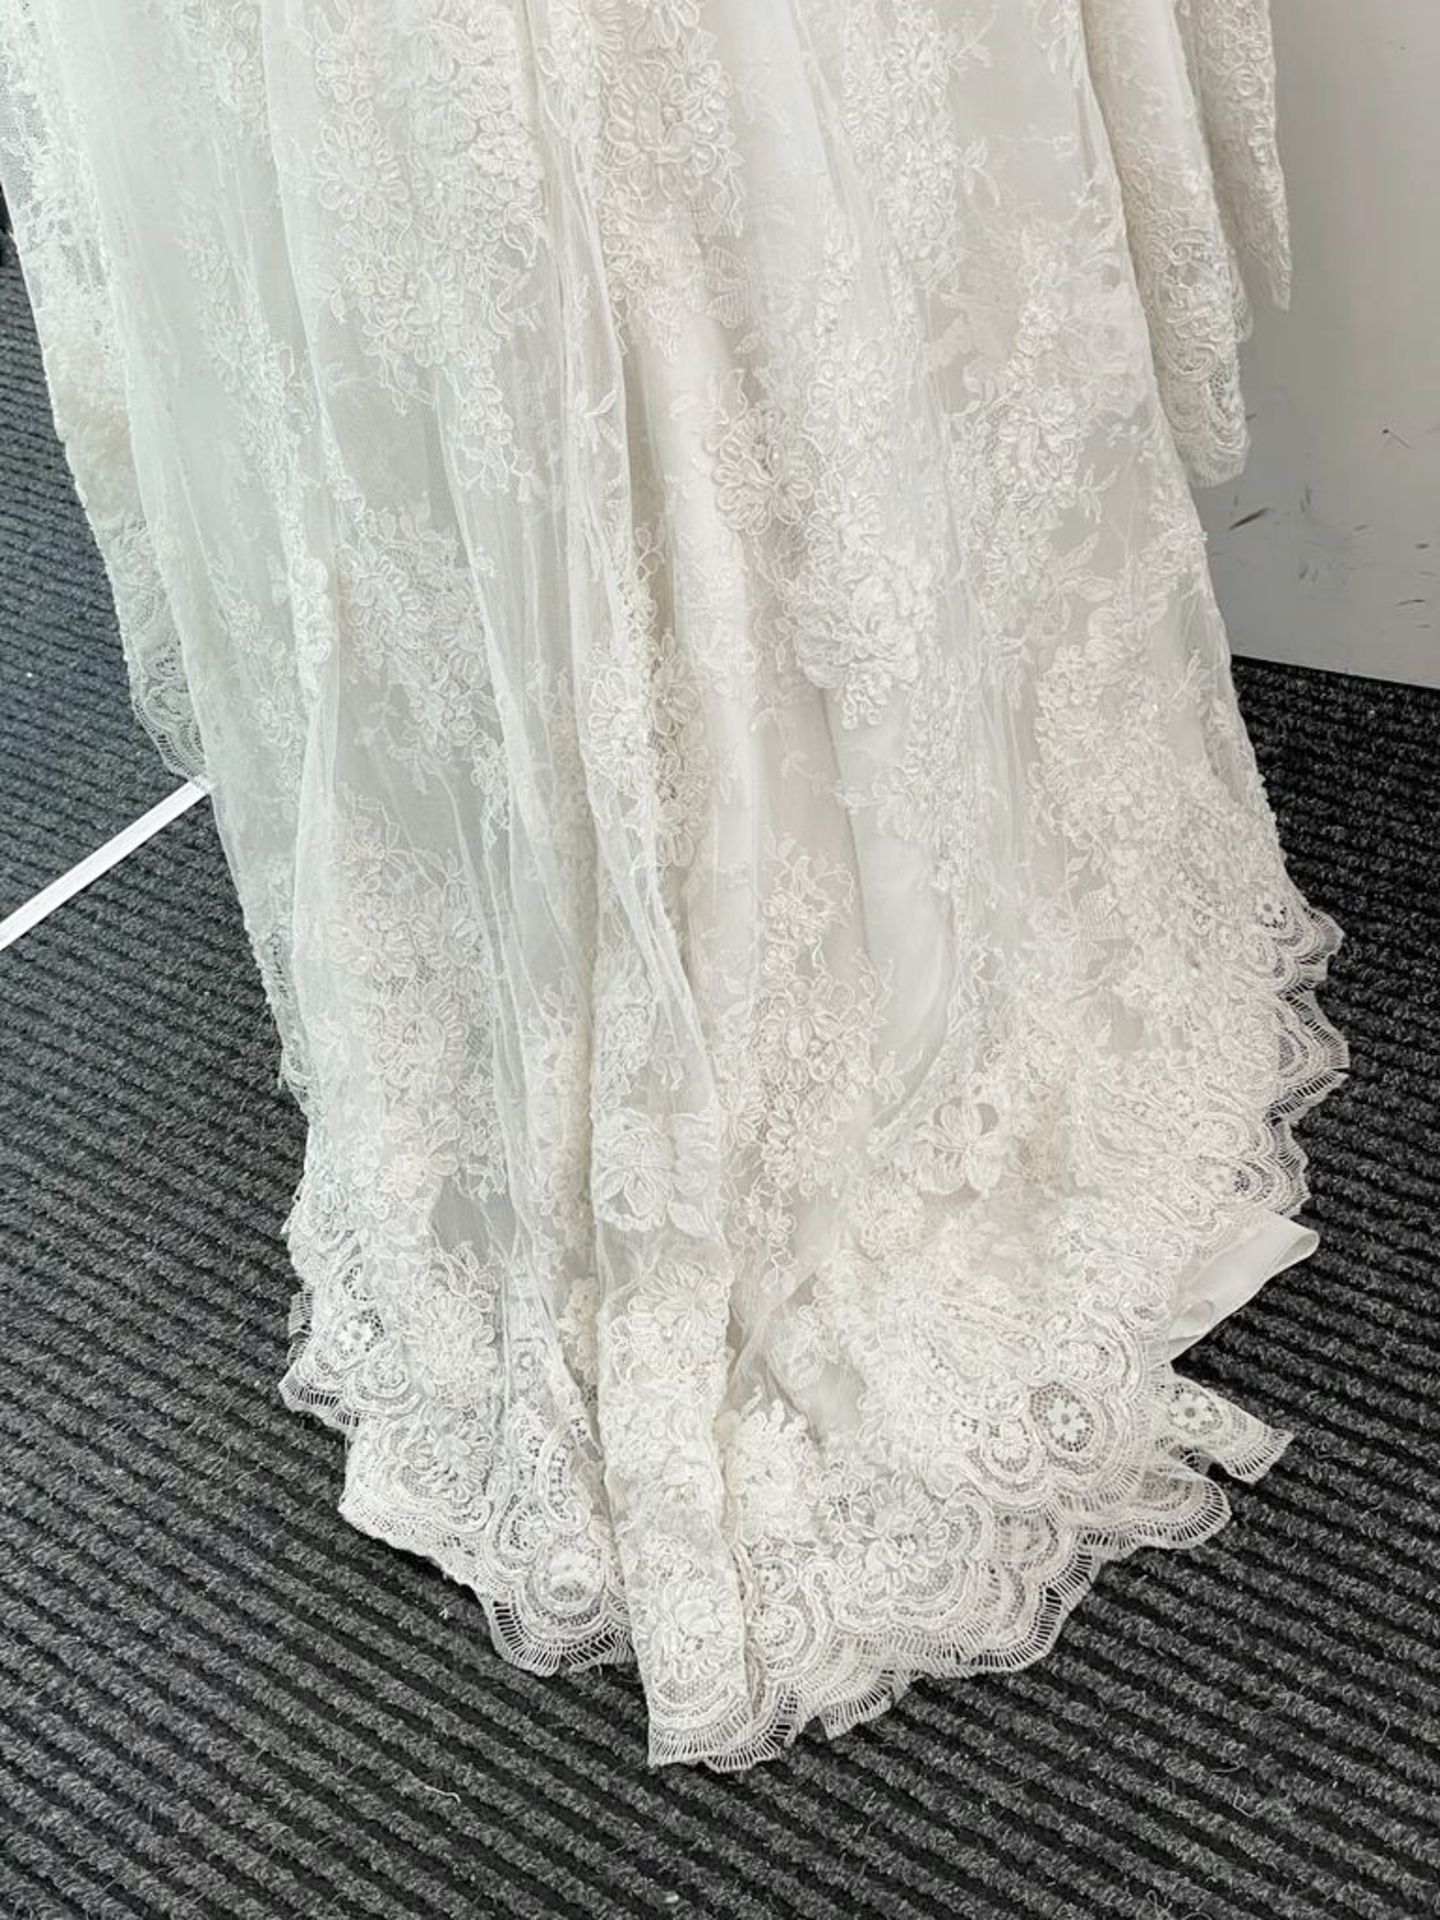 1 x LUSAN MANDONGUS 'Iona' Designer Wedding Dress Bridal Gown - Size: UK 12 - Original RRP £1,950 - Image 12 of 12